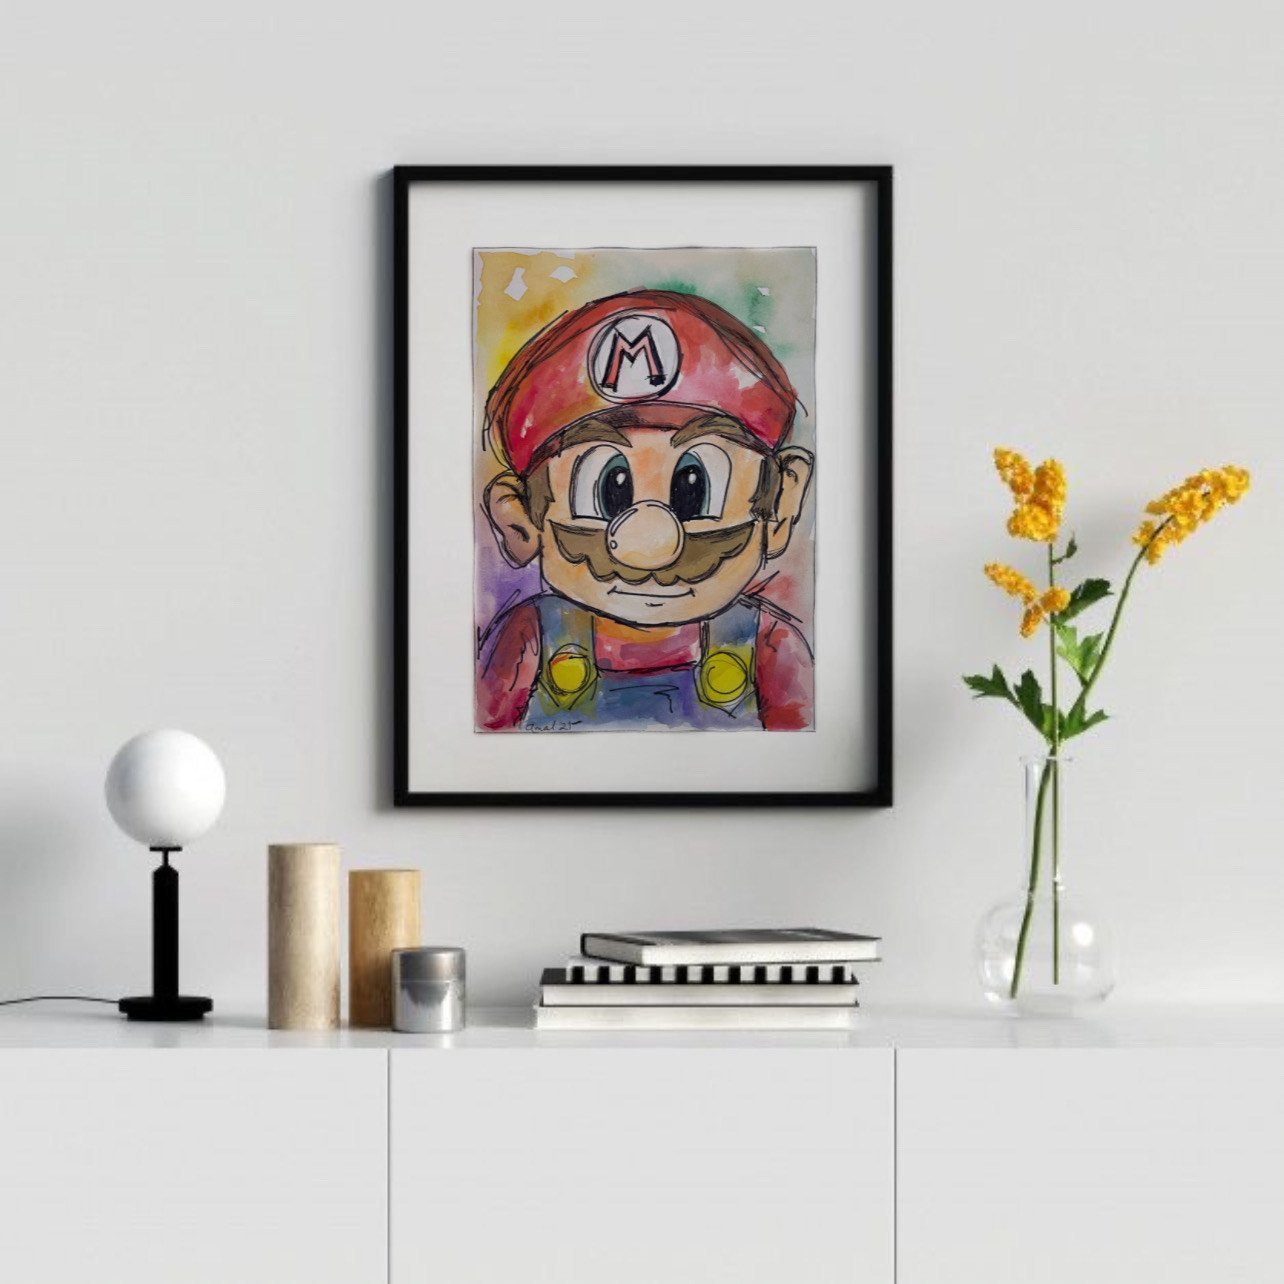 Mario Watercolor Painting - Store 974 | ستور ٩٧٤